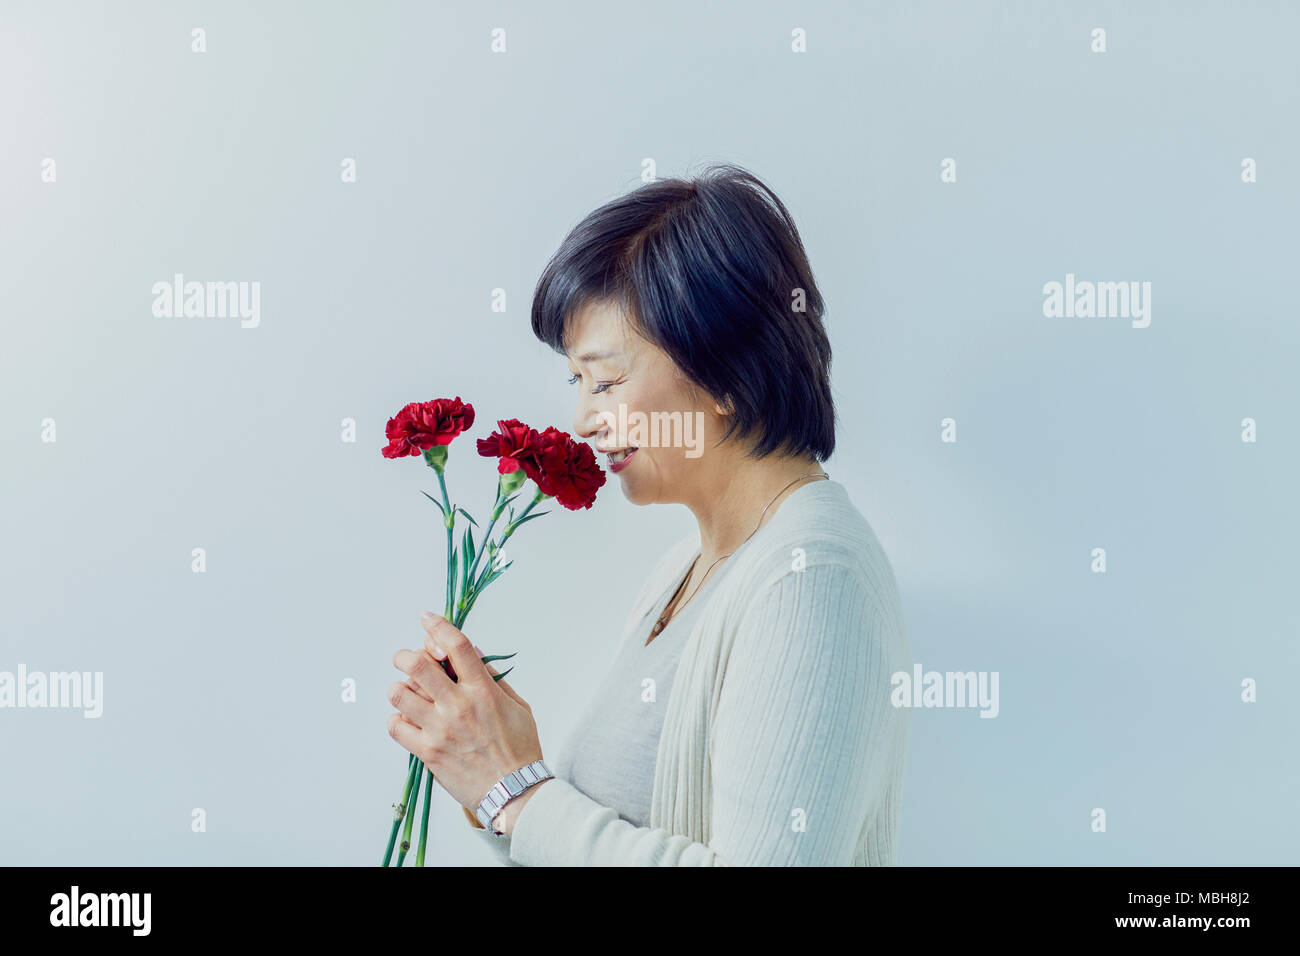 Japanese senior woman holding red roses Stock Photo